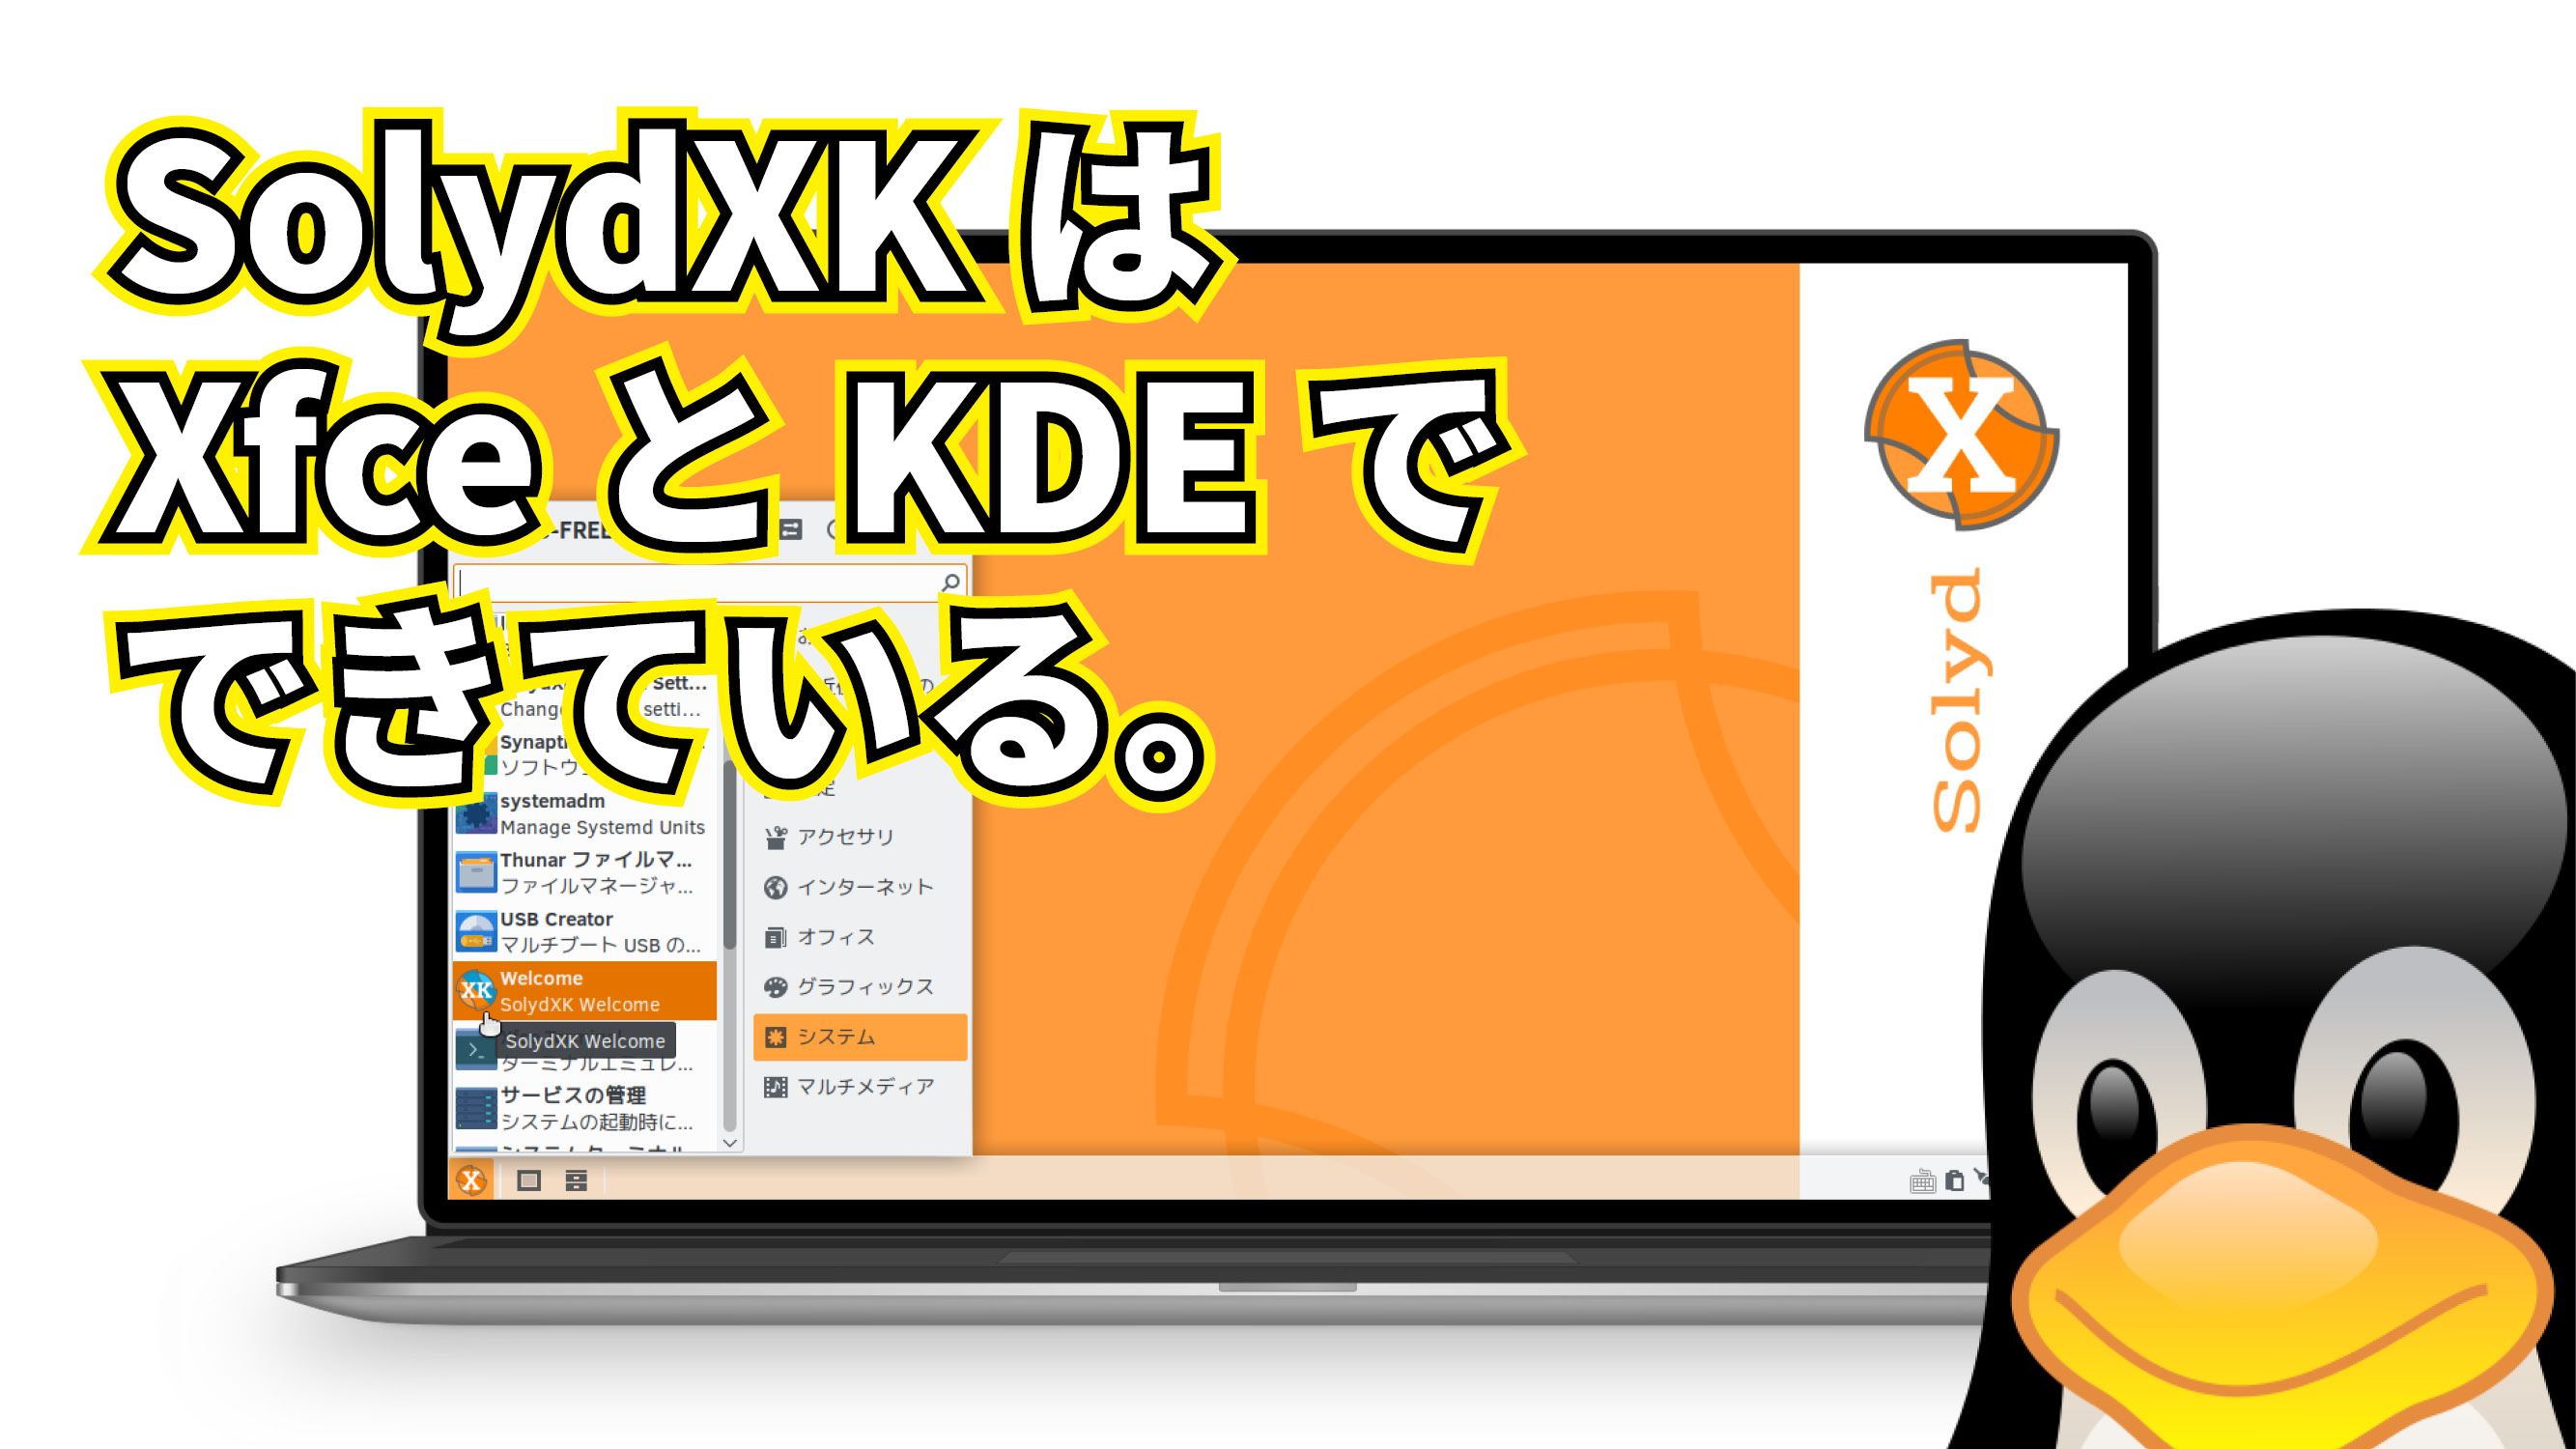 SolydXKはXfceとKDEでできている。